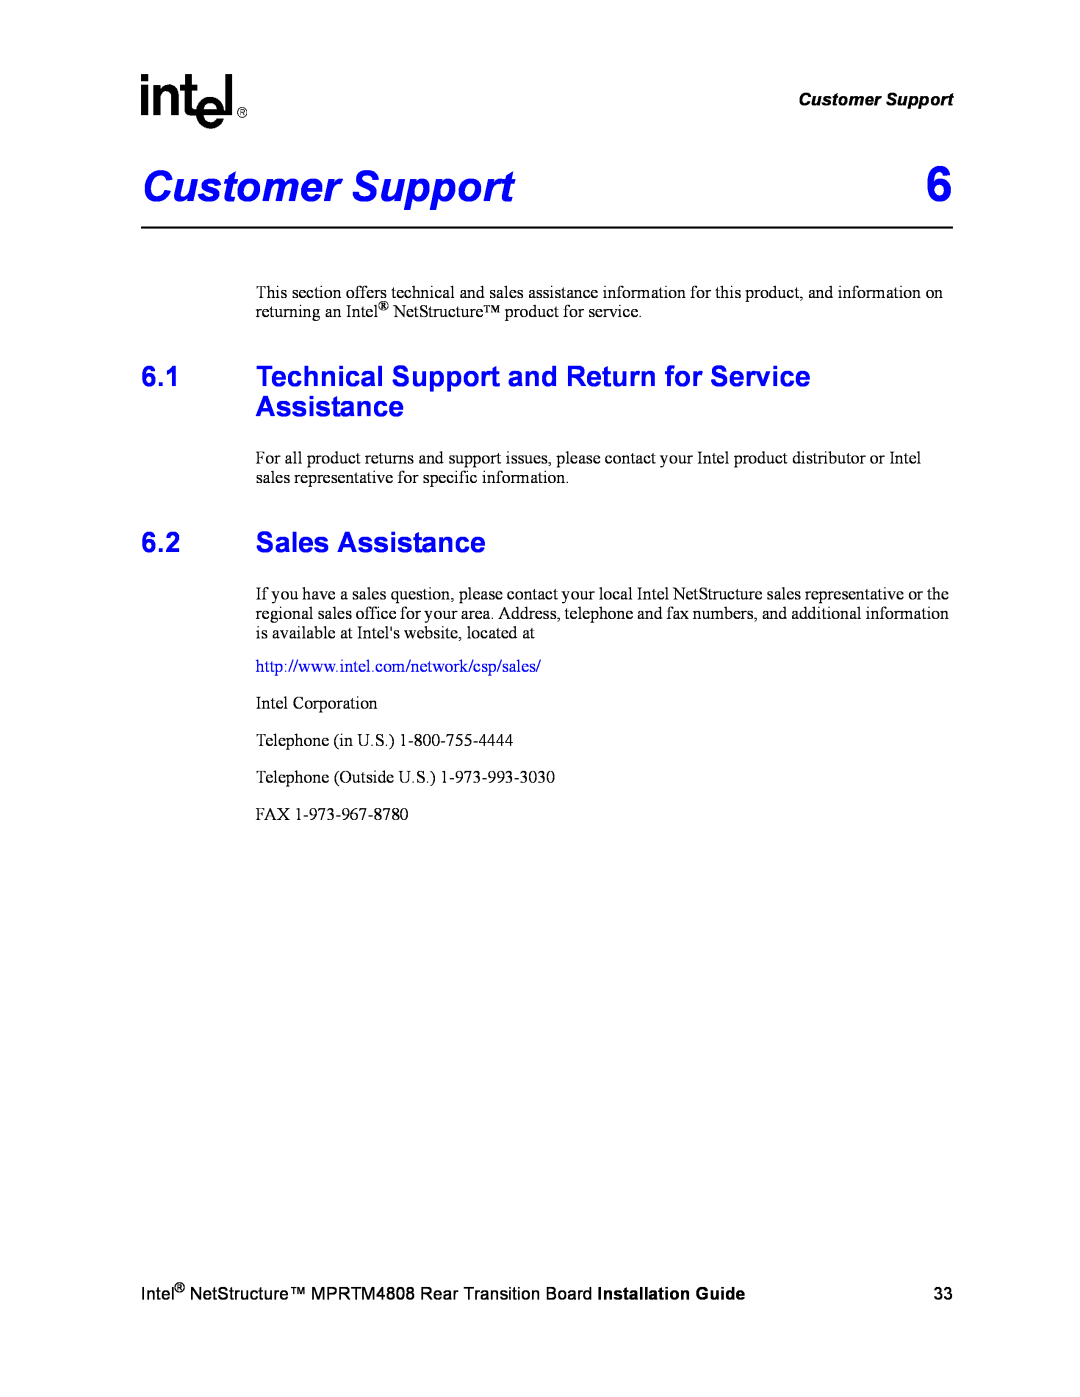 Intel MPRTM4808 manual Customer Support, 6.2Sales Assistance 